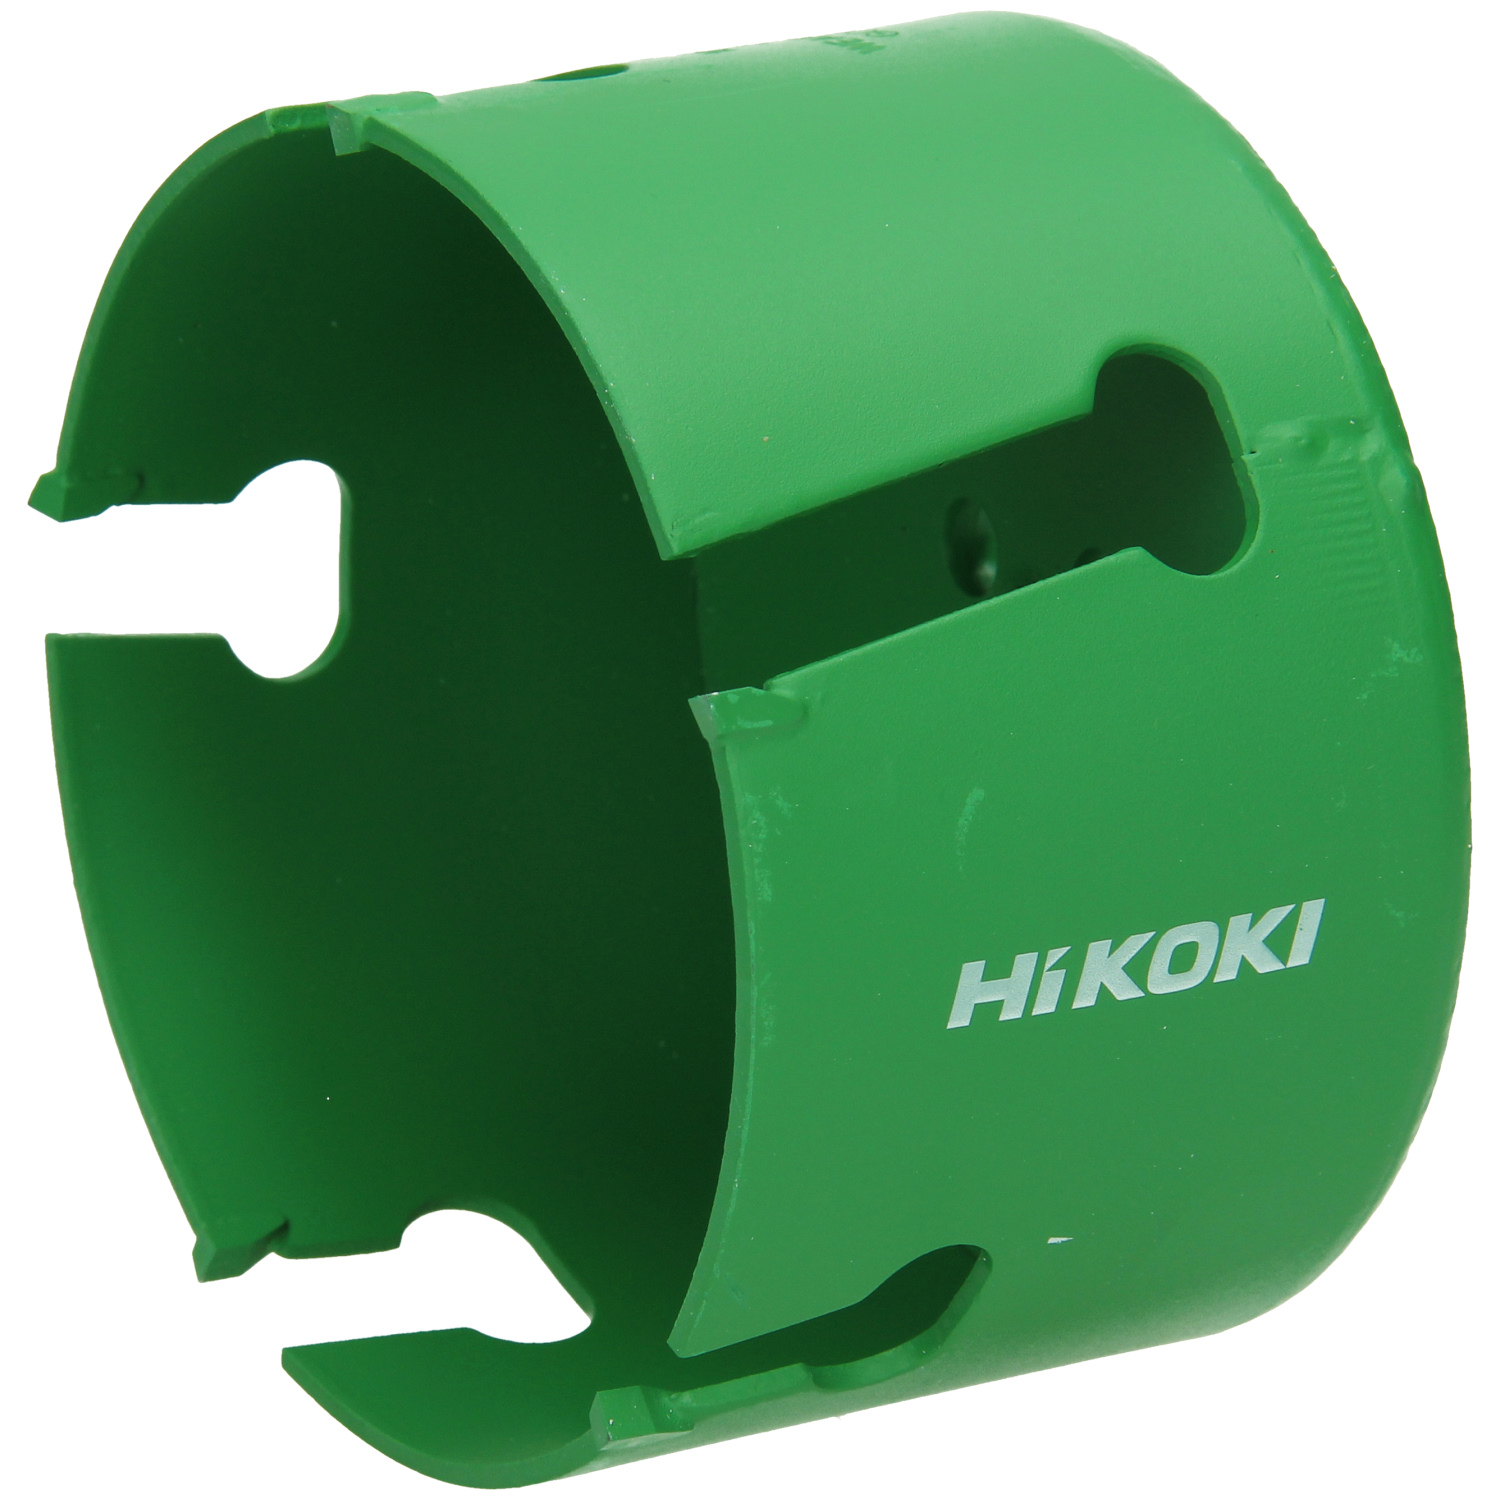 Hikoki HM-Lochsäge 105mm / -754231